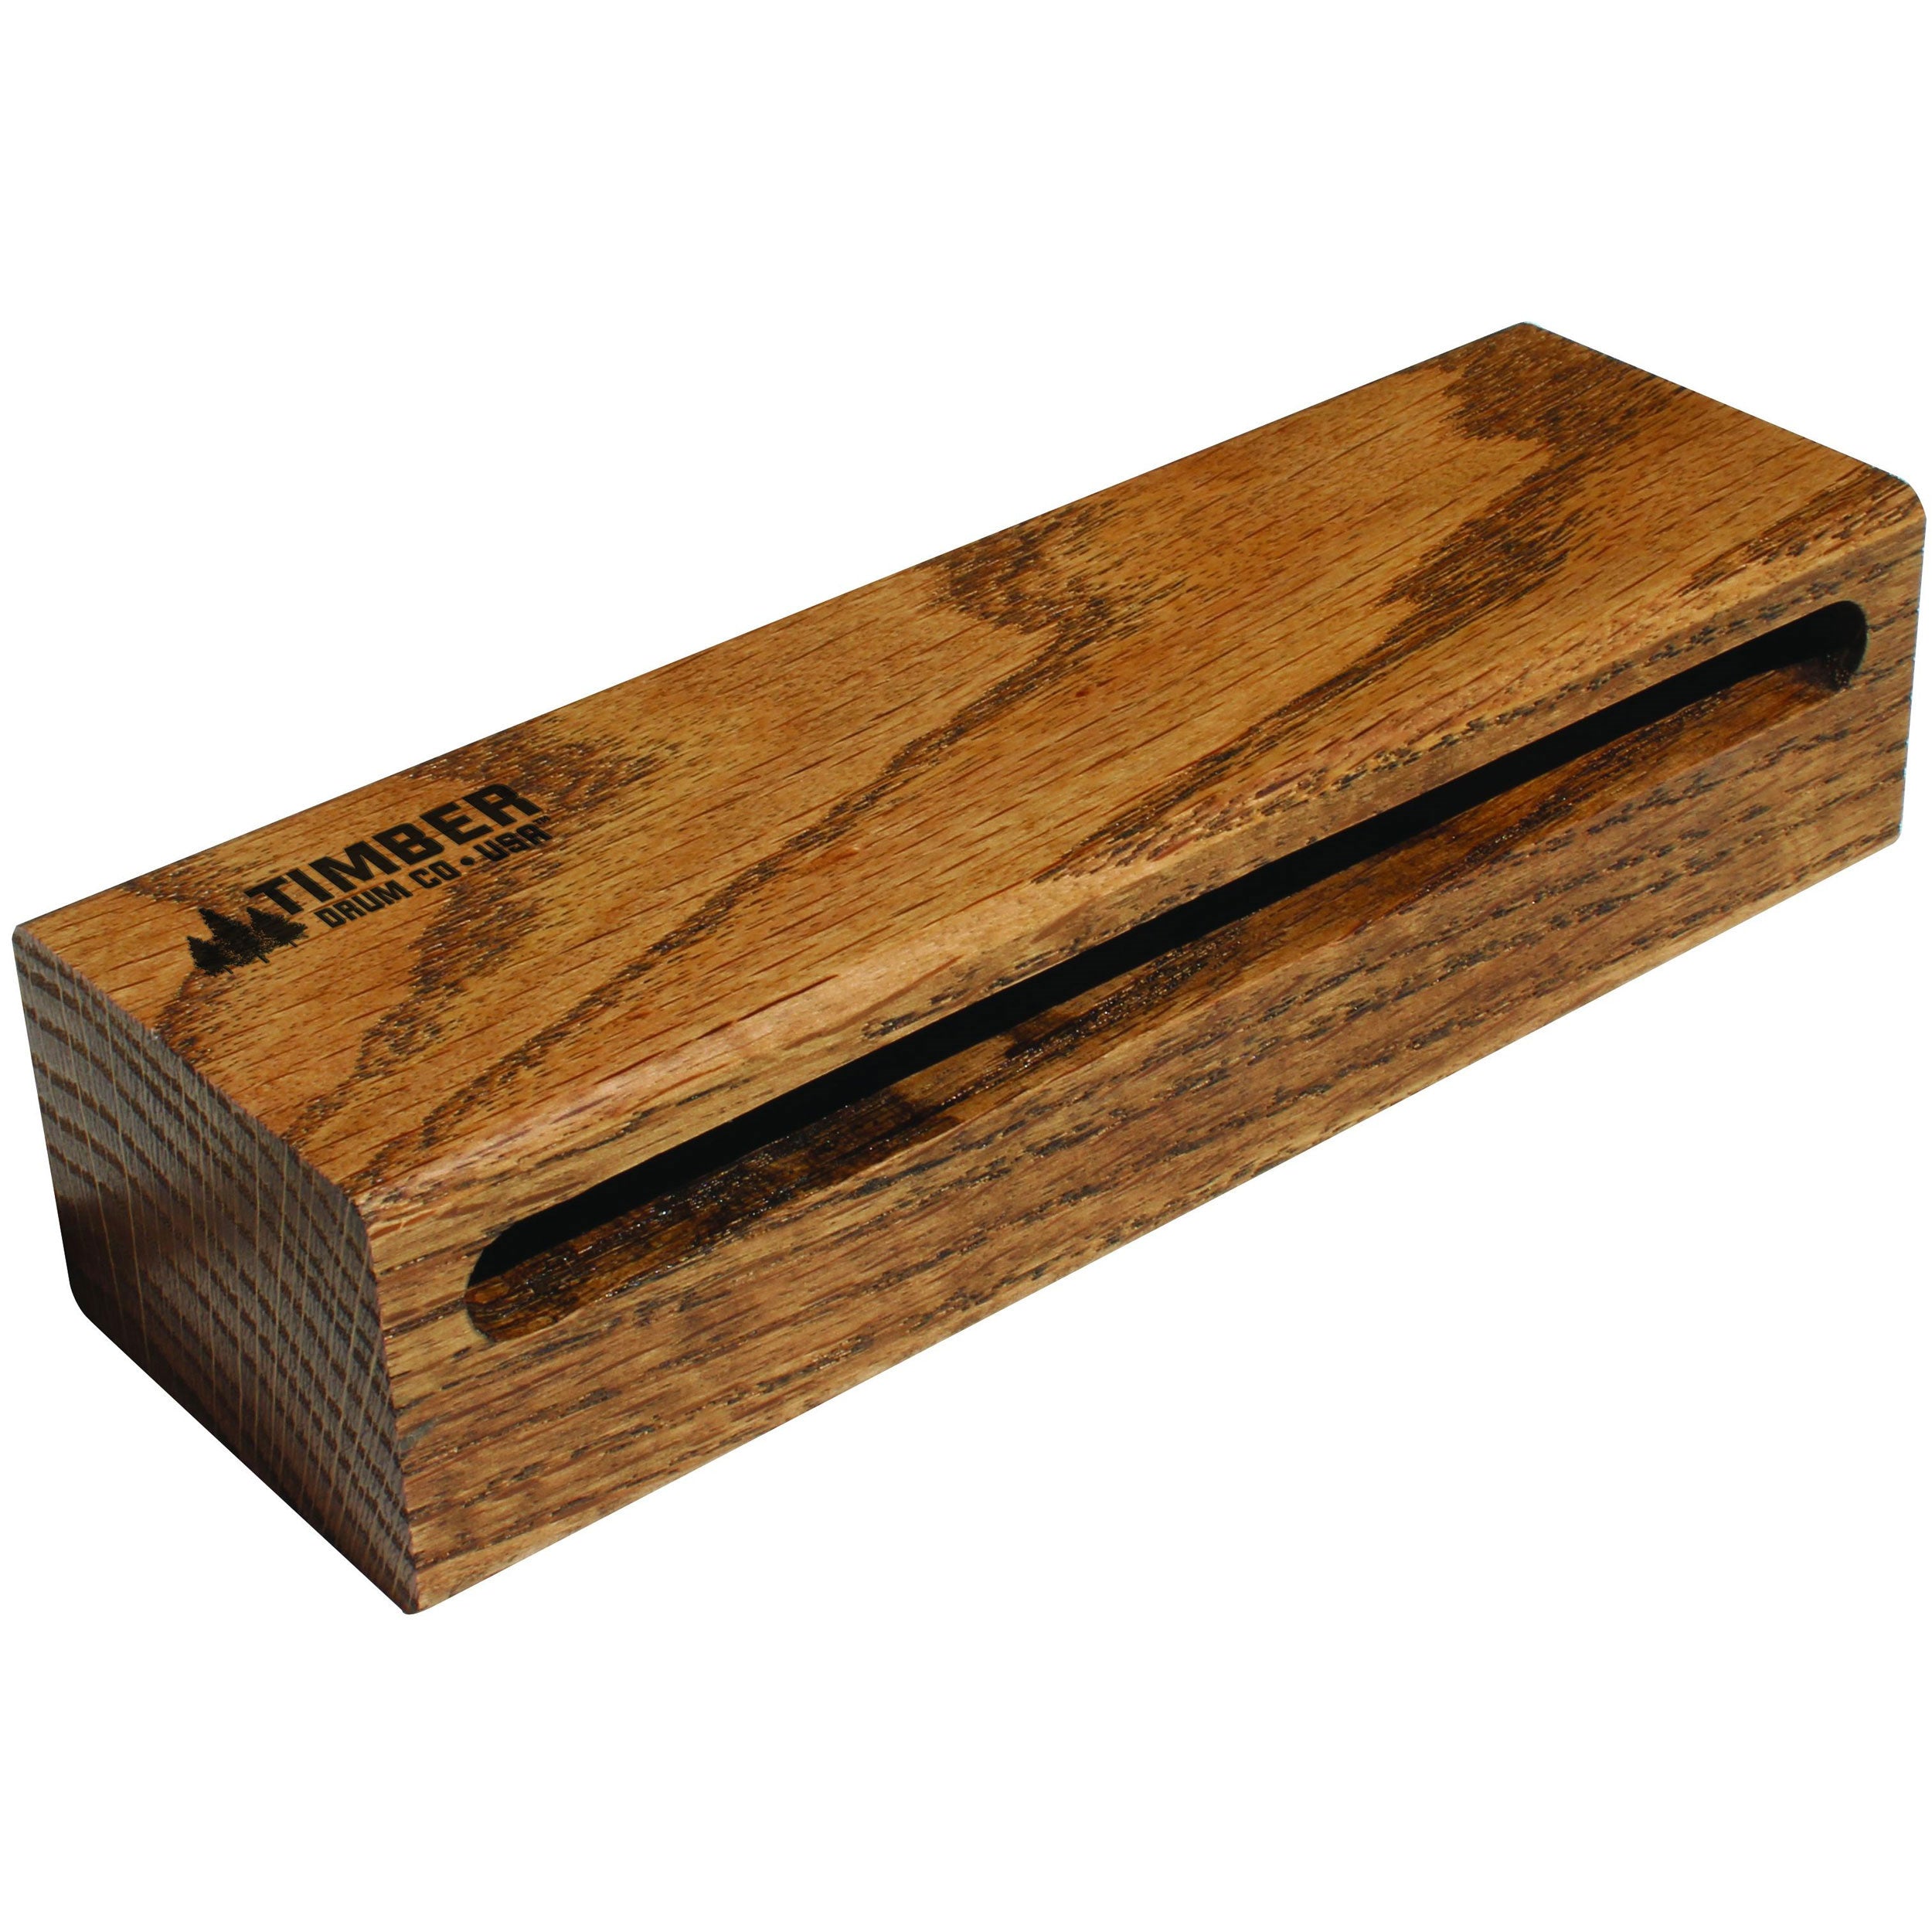 TreeWorks/Timber T4-L Large Wood Block